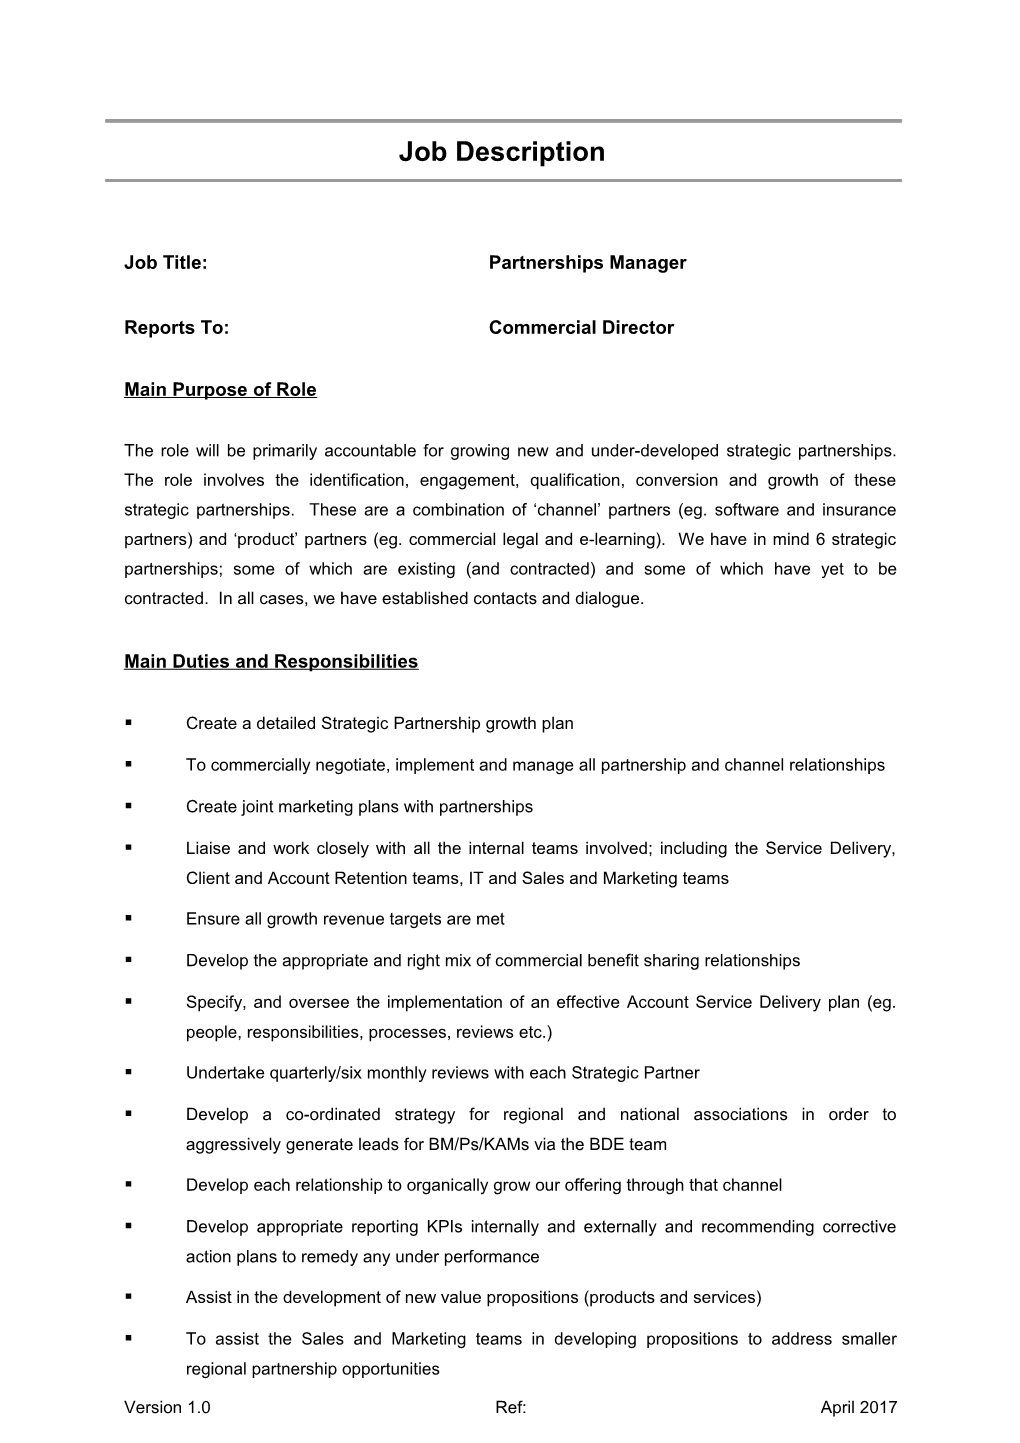 Job Title:Partnerships Manager